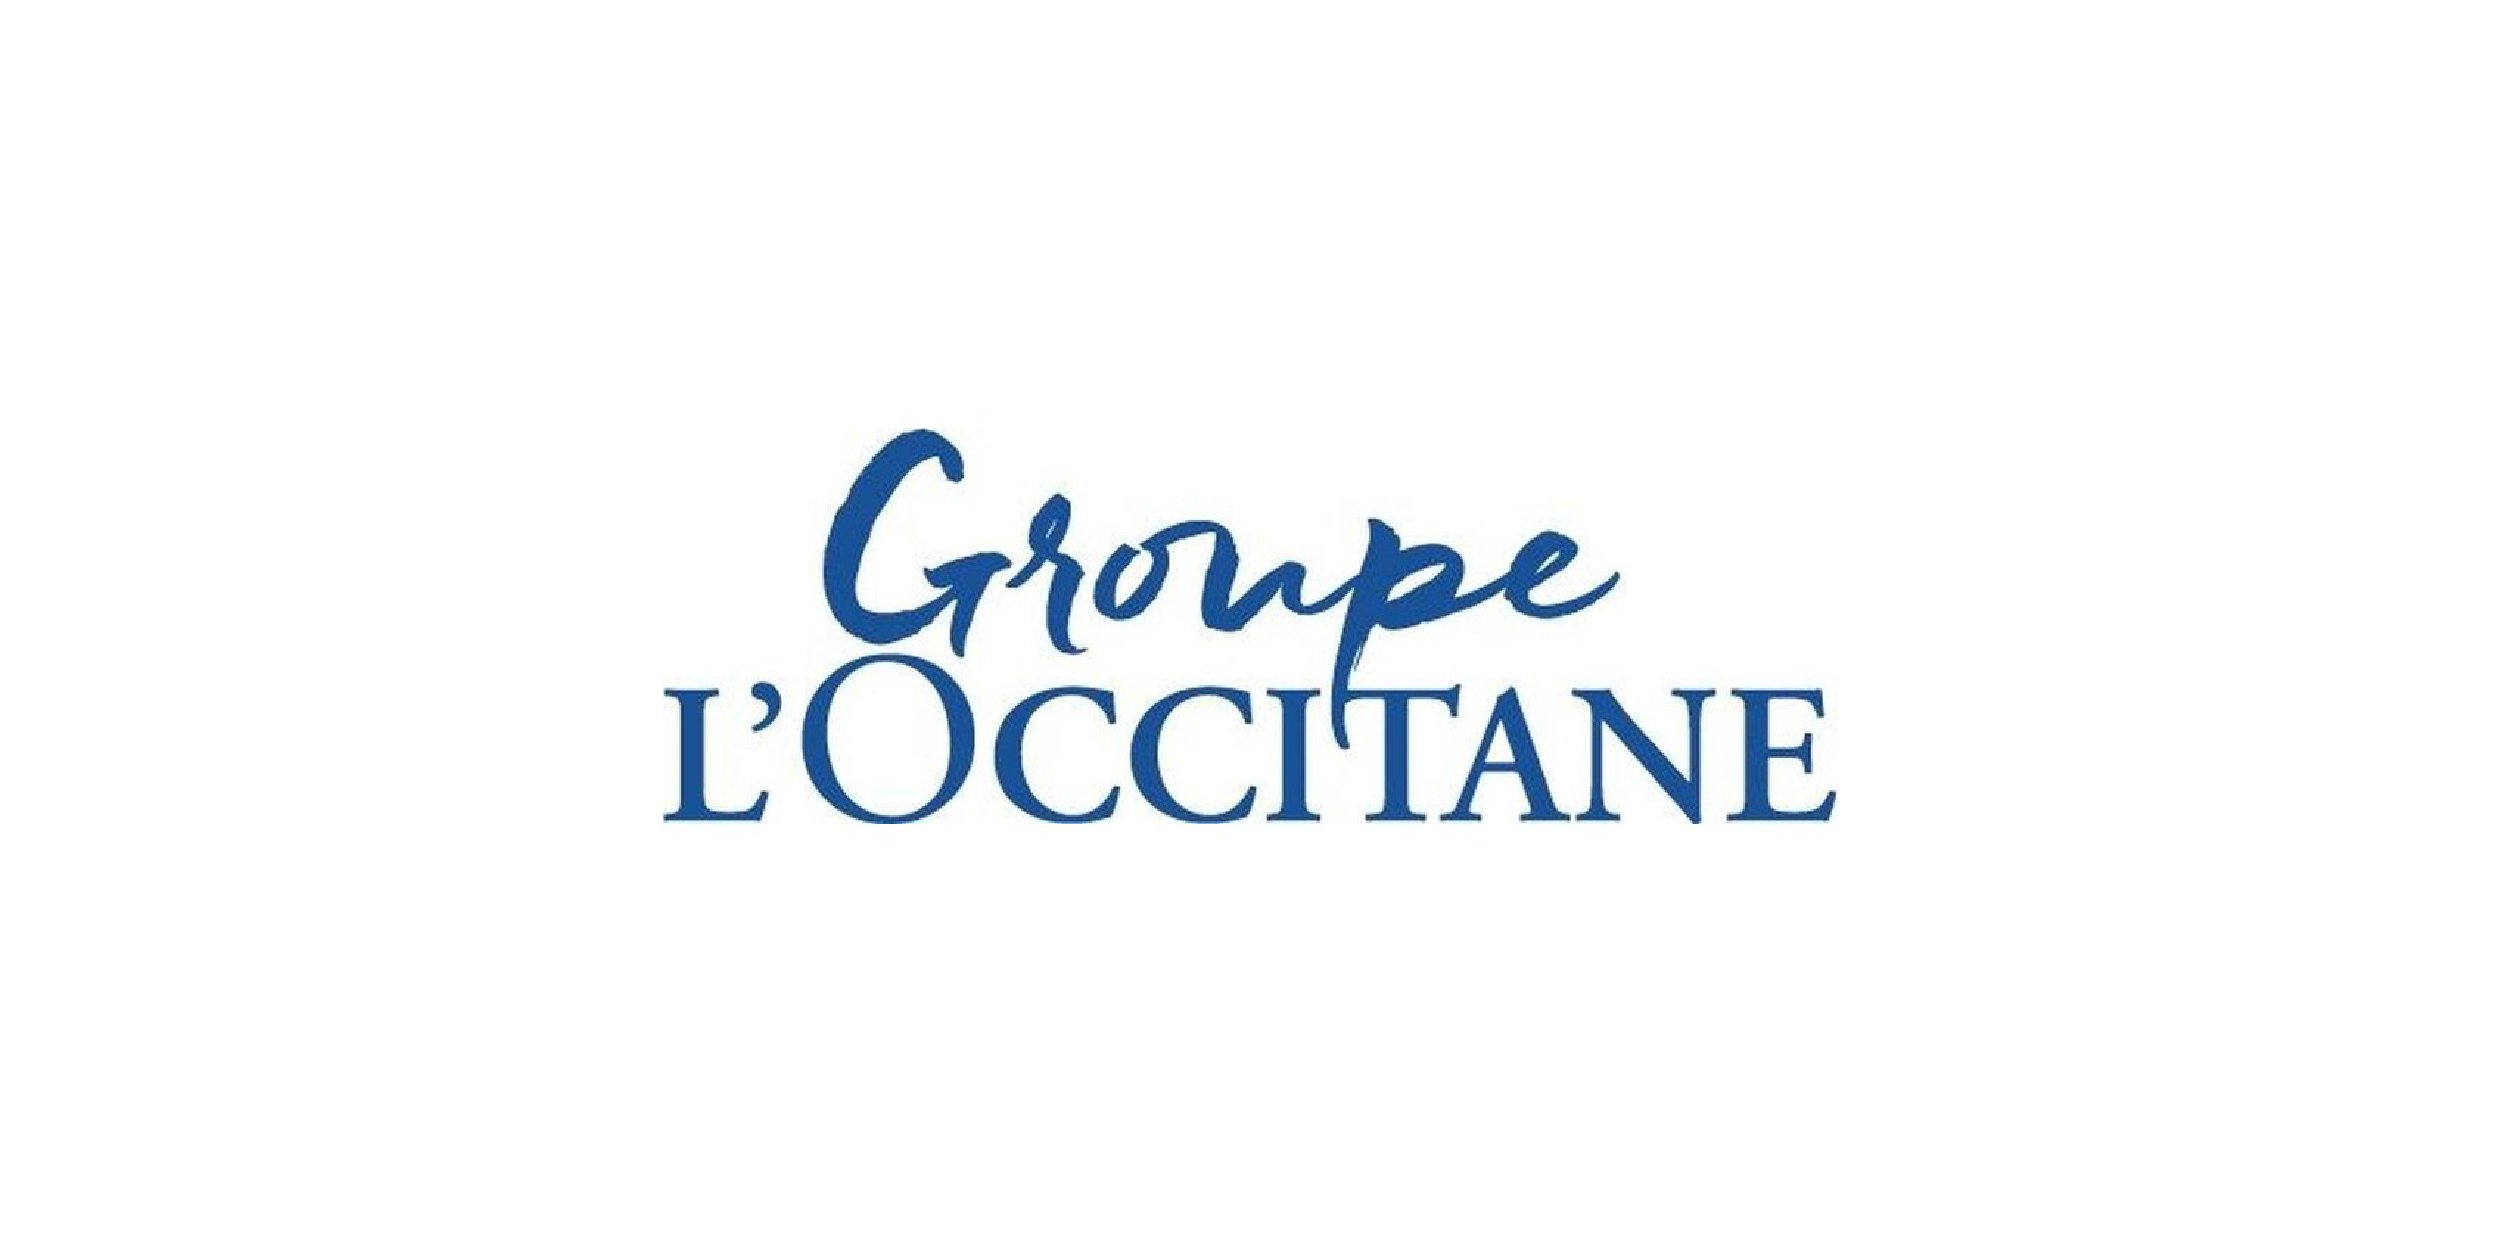 Blackstone on brink of L’Occitane deal